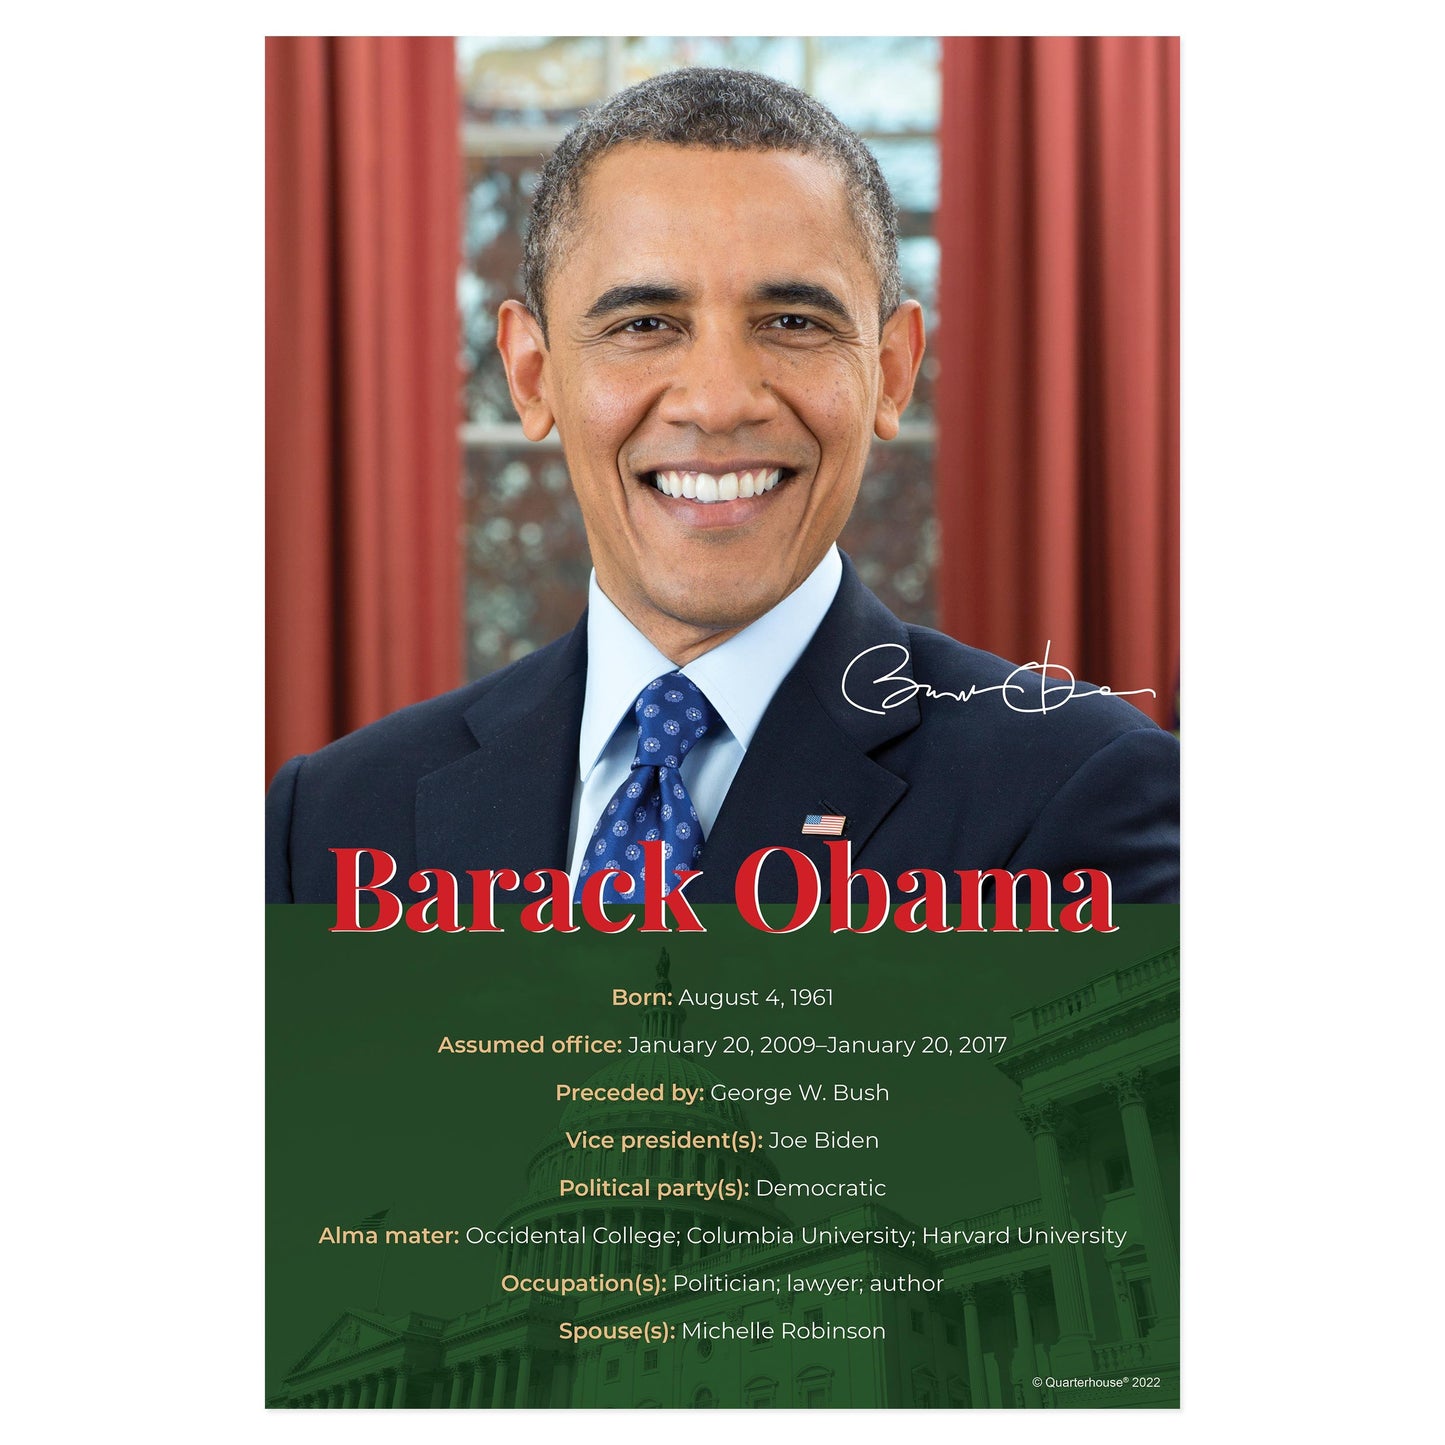 Quarterhouse President Barrack Obama Biographical Poster, Social Studies Classroom Materials for Teachers